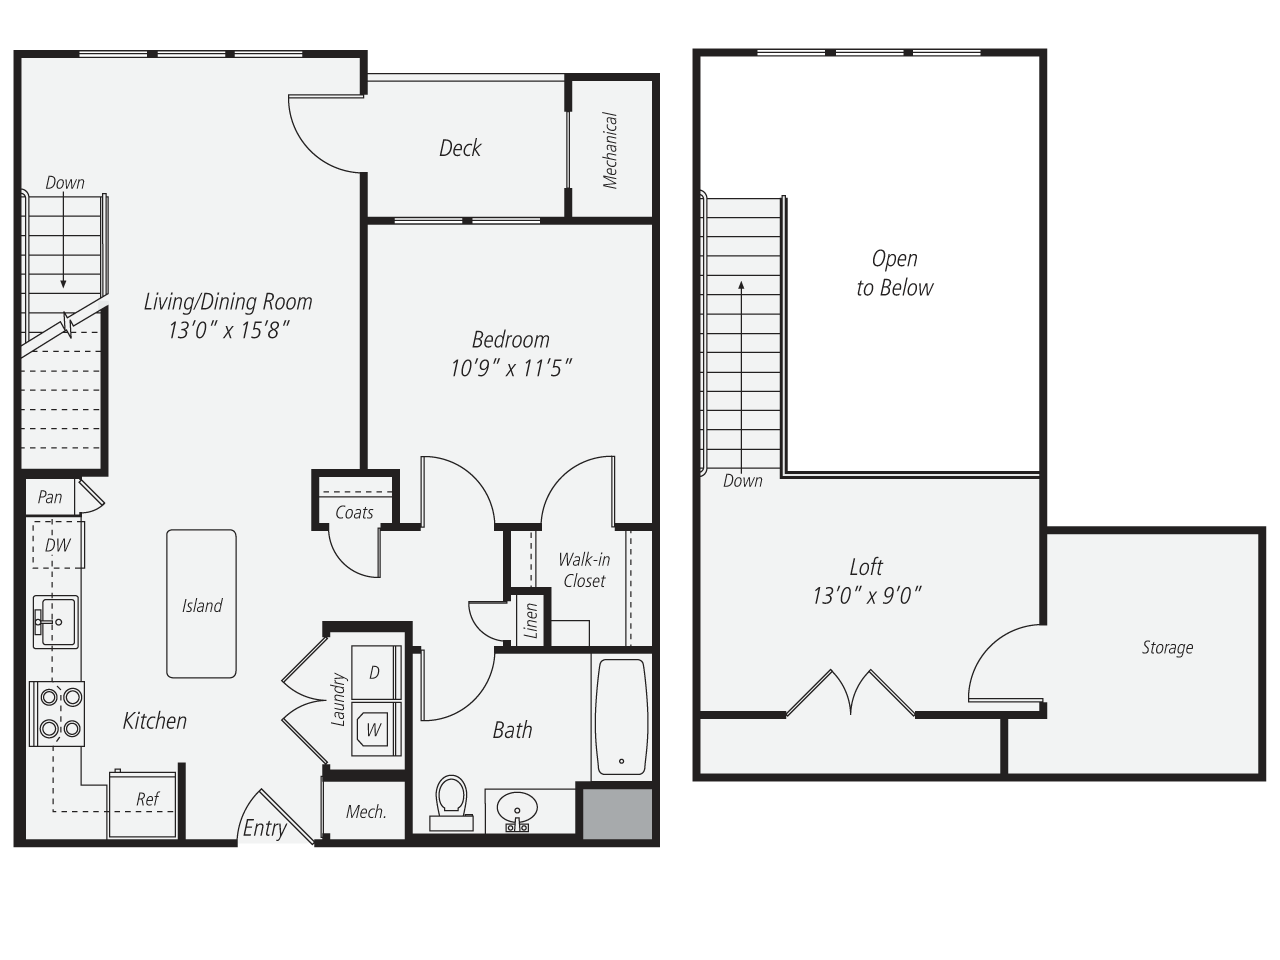 Floorplan for Apartment #429, 1 bedroom unit at Halstead Norwalk